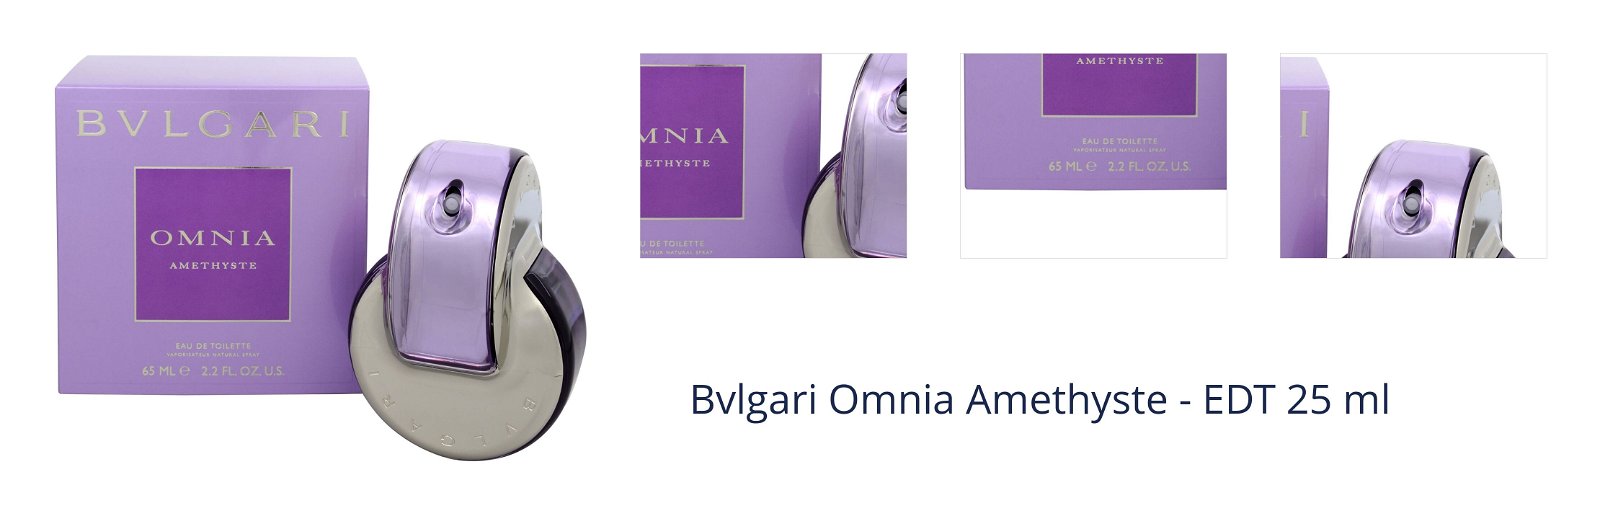 Bvlgari Omnia Amethyste - EDT 25 ml 1